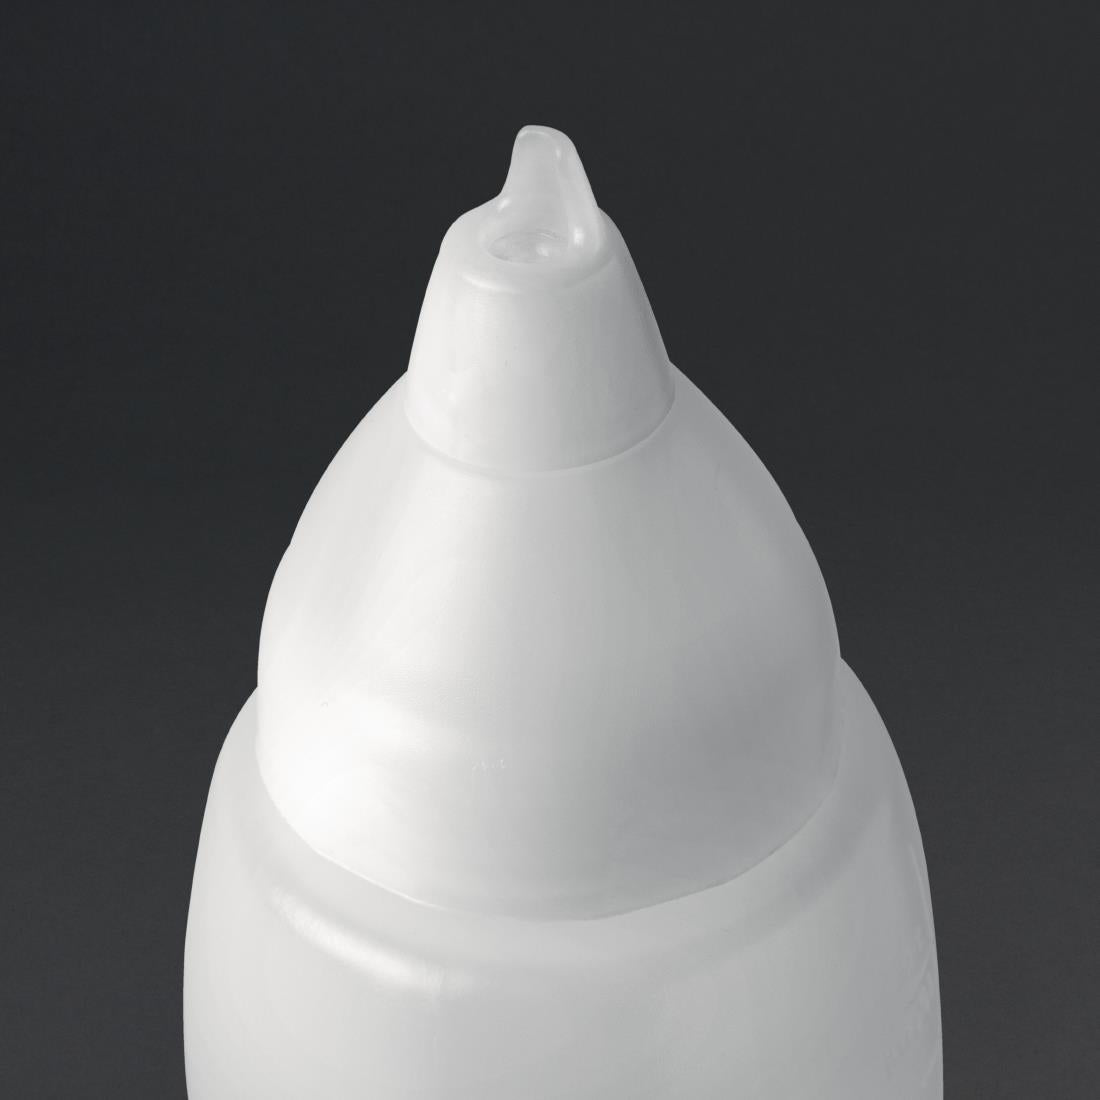 CW112 Araven Clear Non-Drip Sauce Bottle 17oz JD Catering Equipment Solutions Ltd